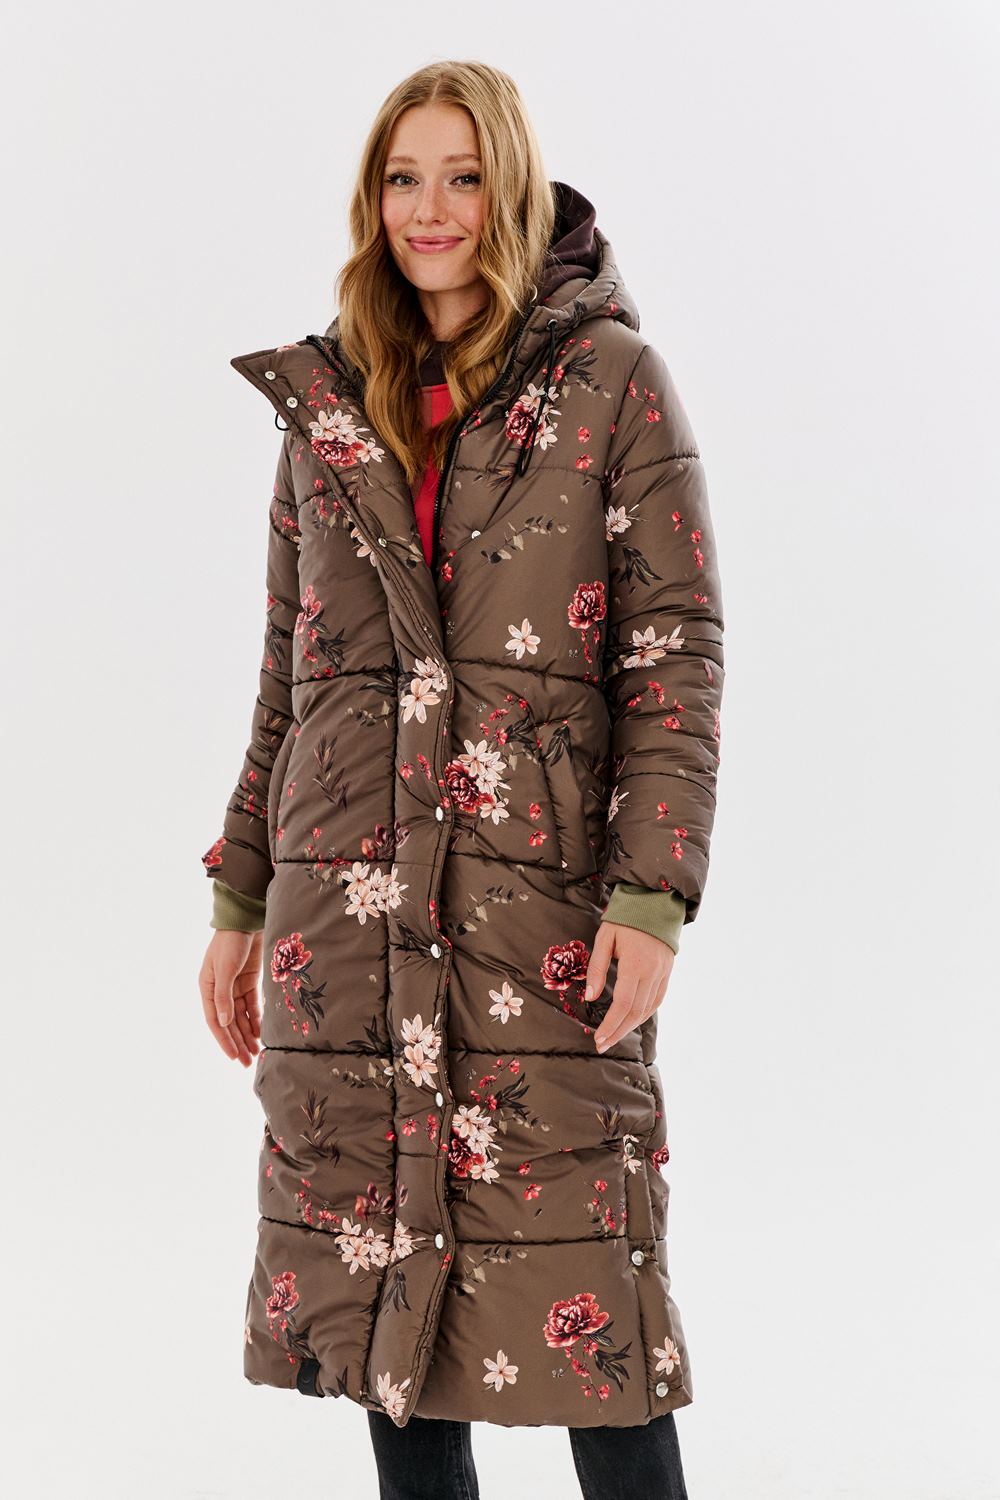 Olivia Orchid winter jacket